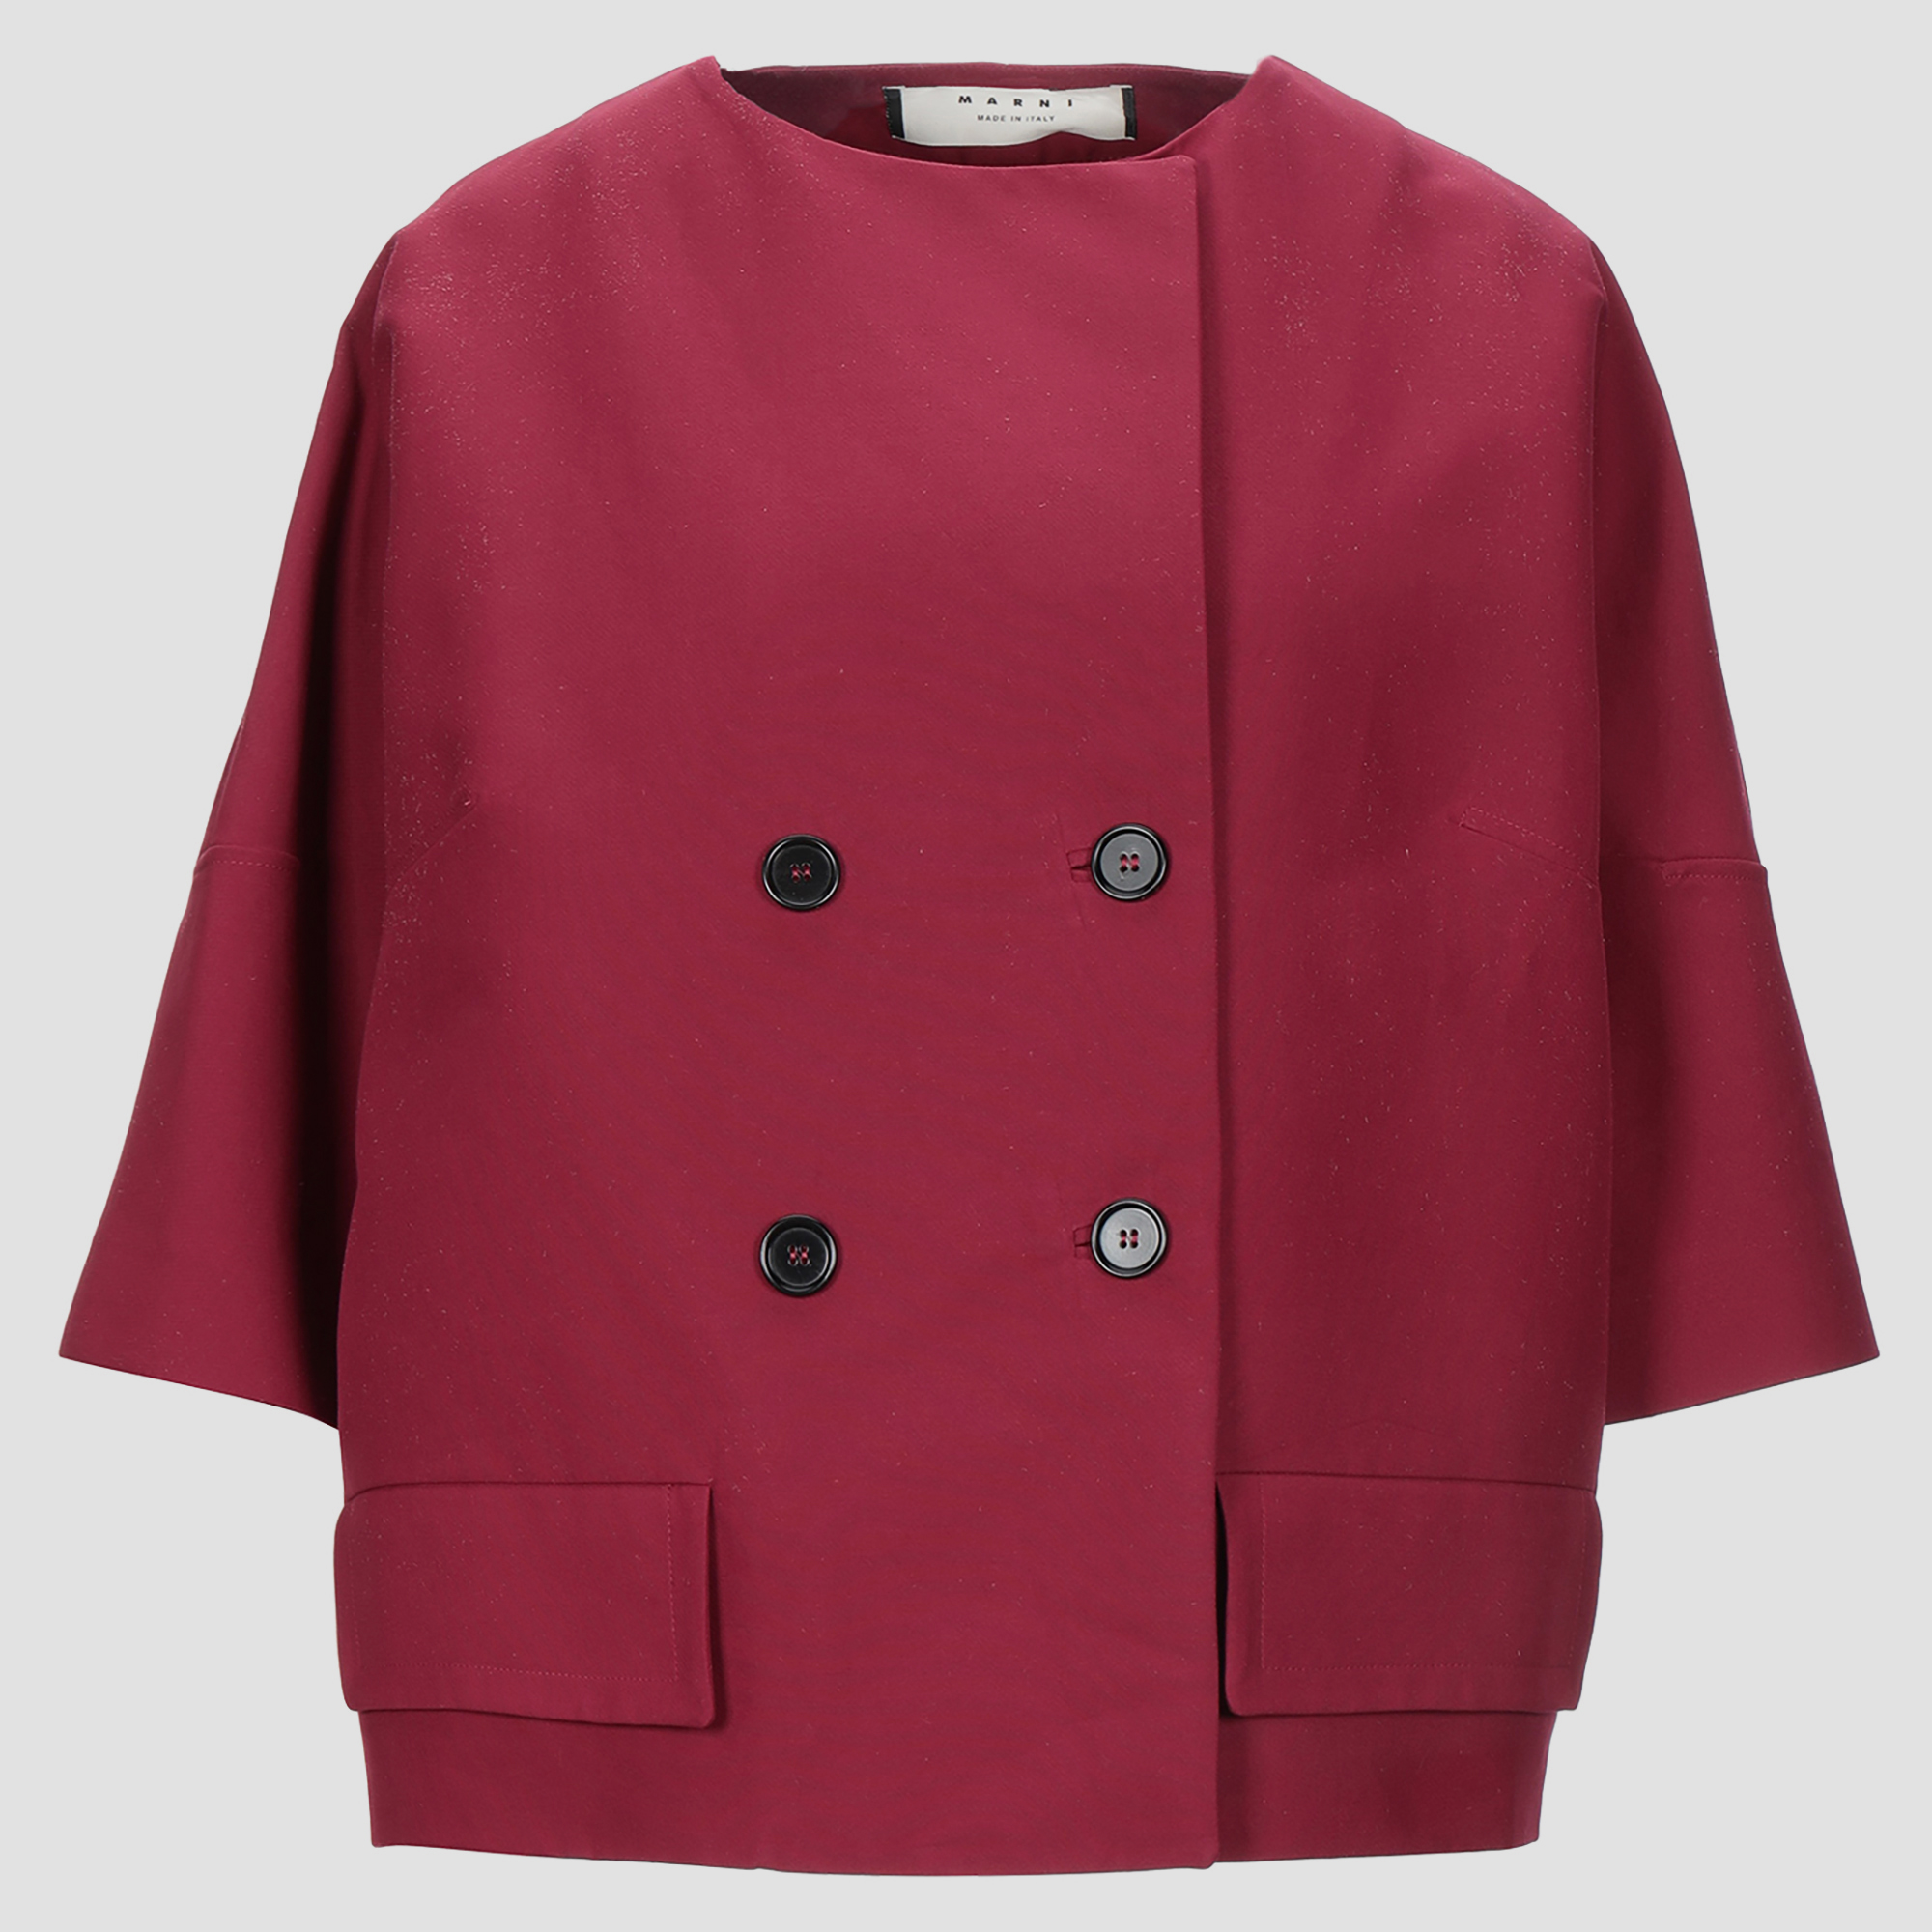 Marni cherry red cotton cady oversized jacket s (it 40)